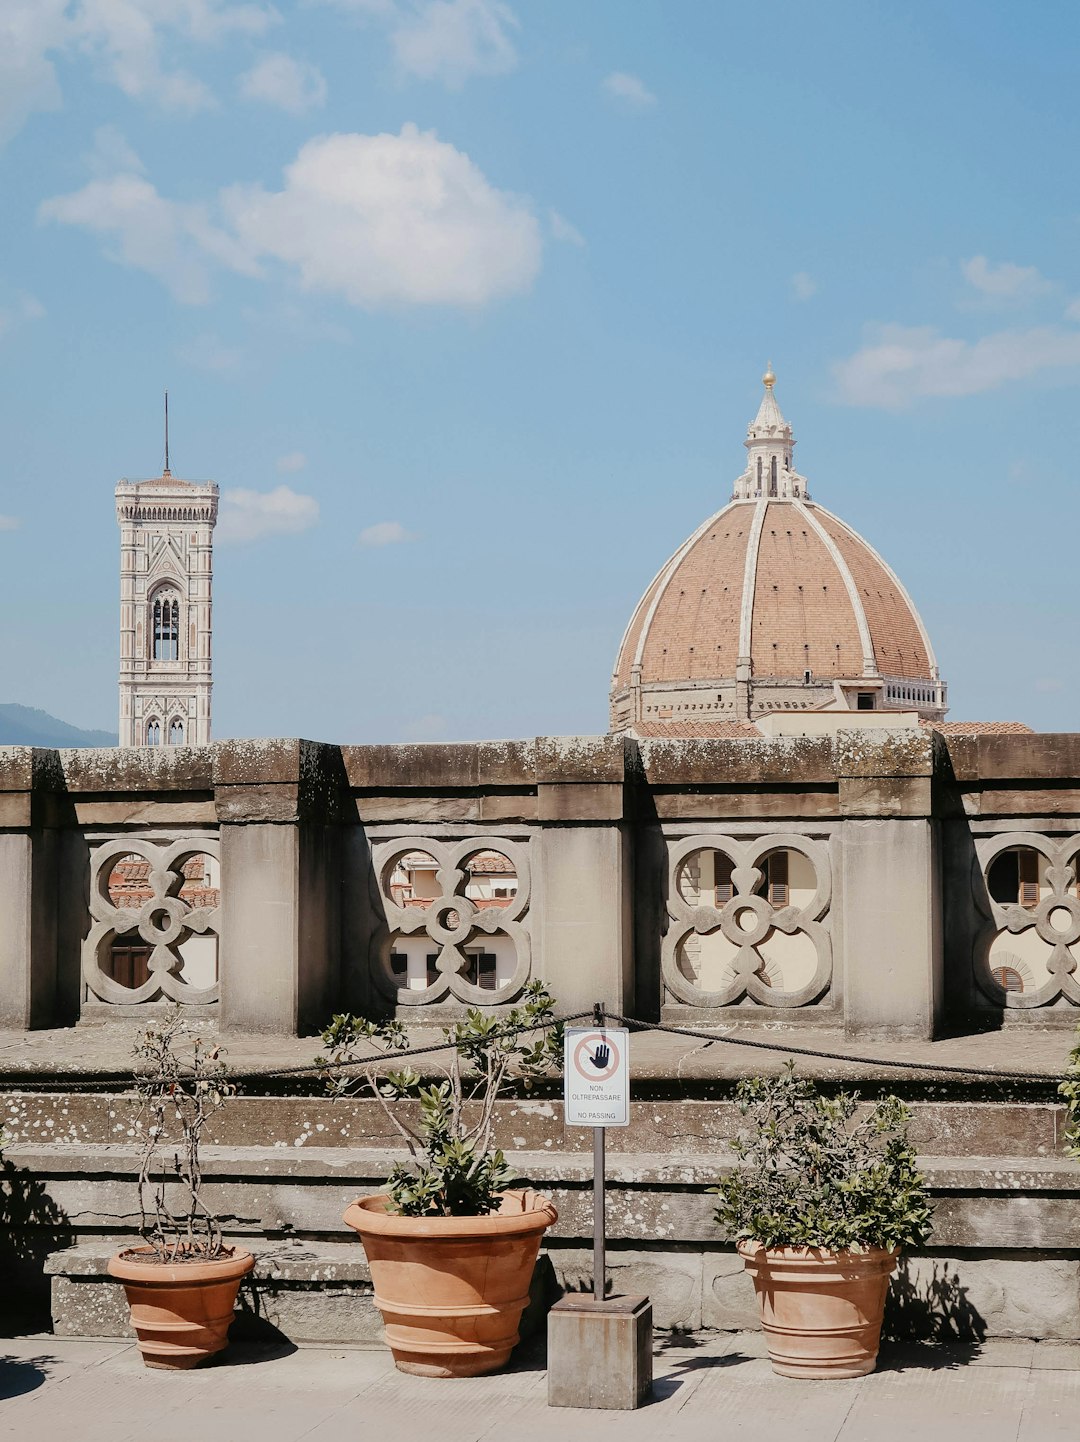 Historic site photo spot Uffizi Gallery Italy